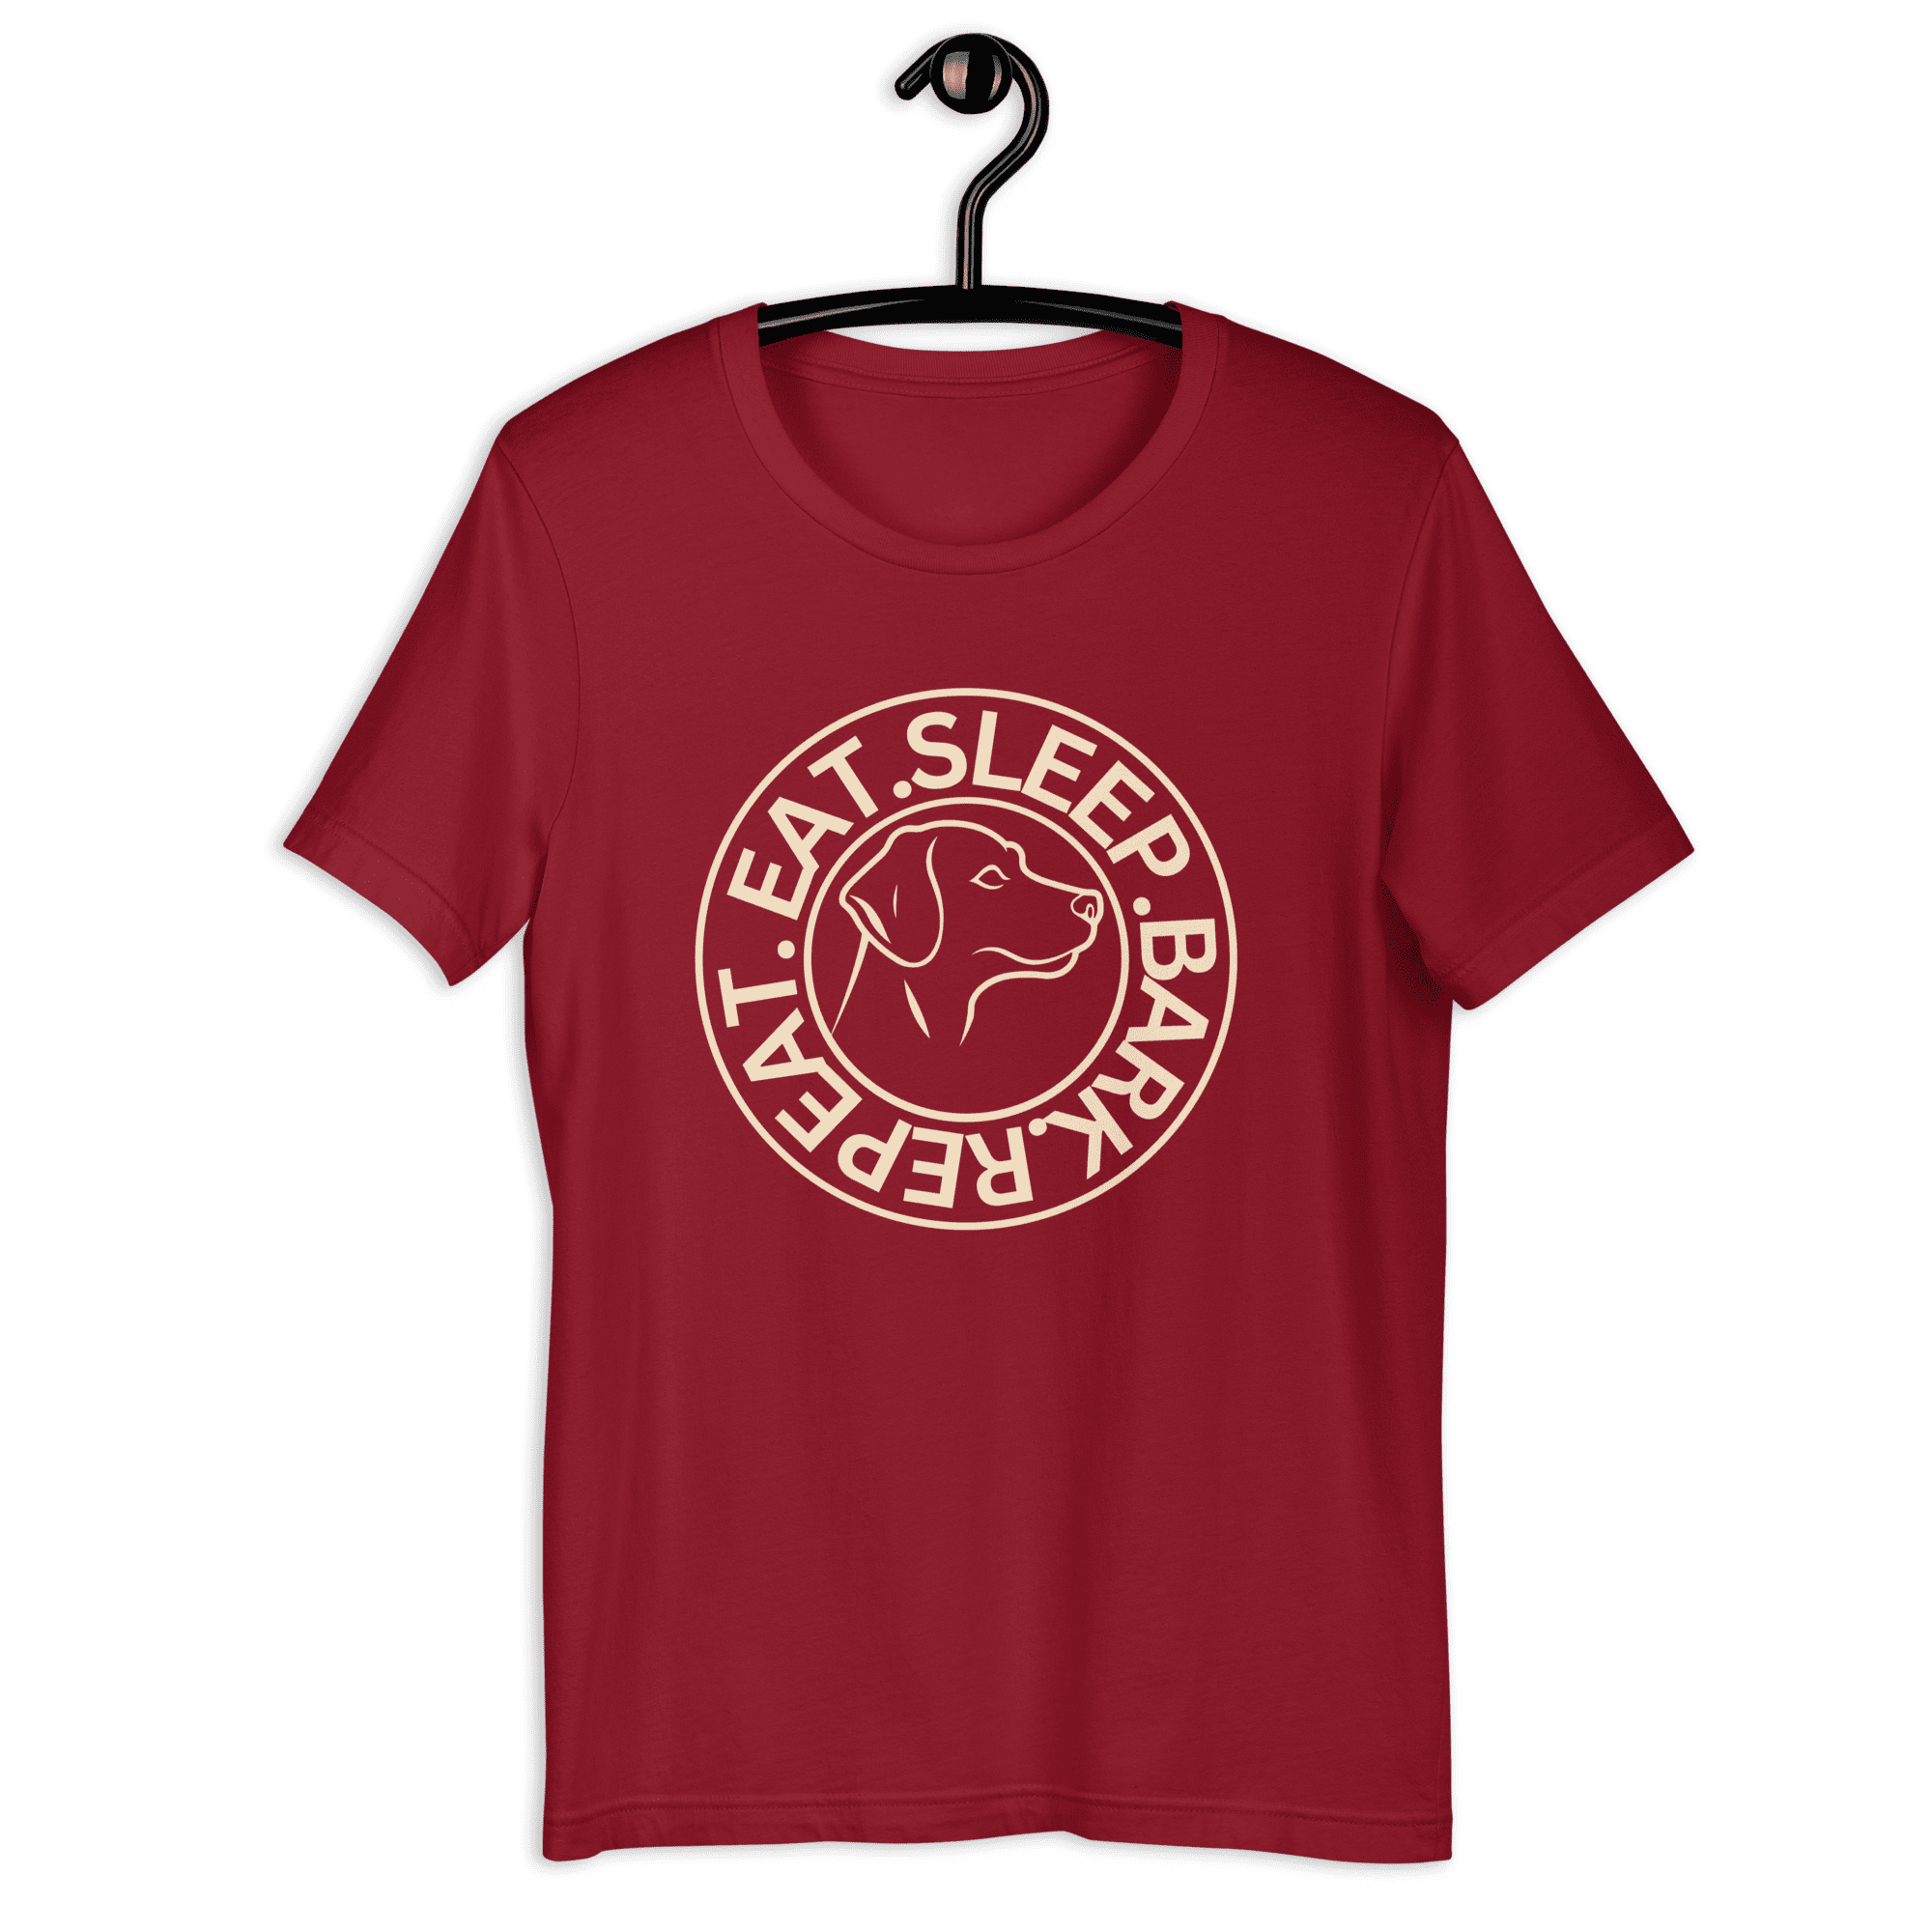 Eat Sleep Bark Repeat Labrador Retriever Unisex T-Shirt. Red